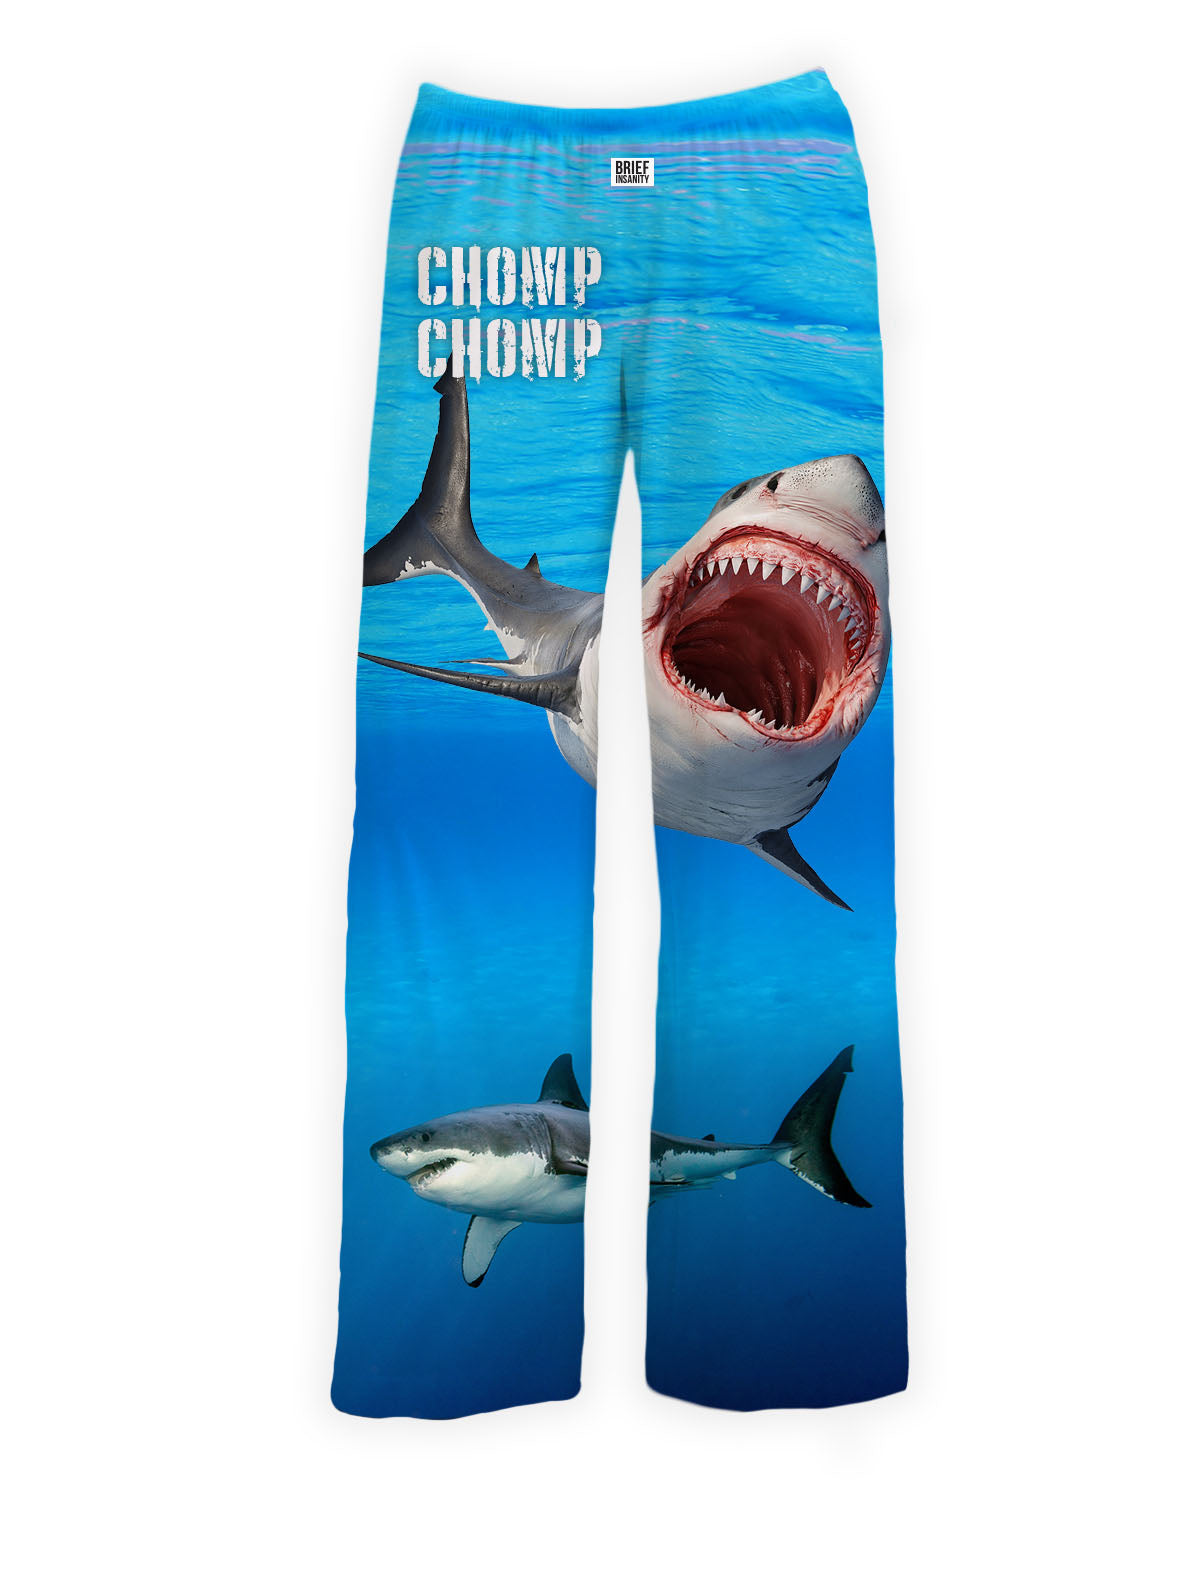 Chomp Chomp Shark Lounge Pants